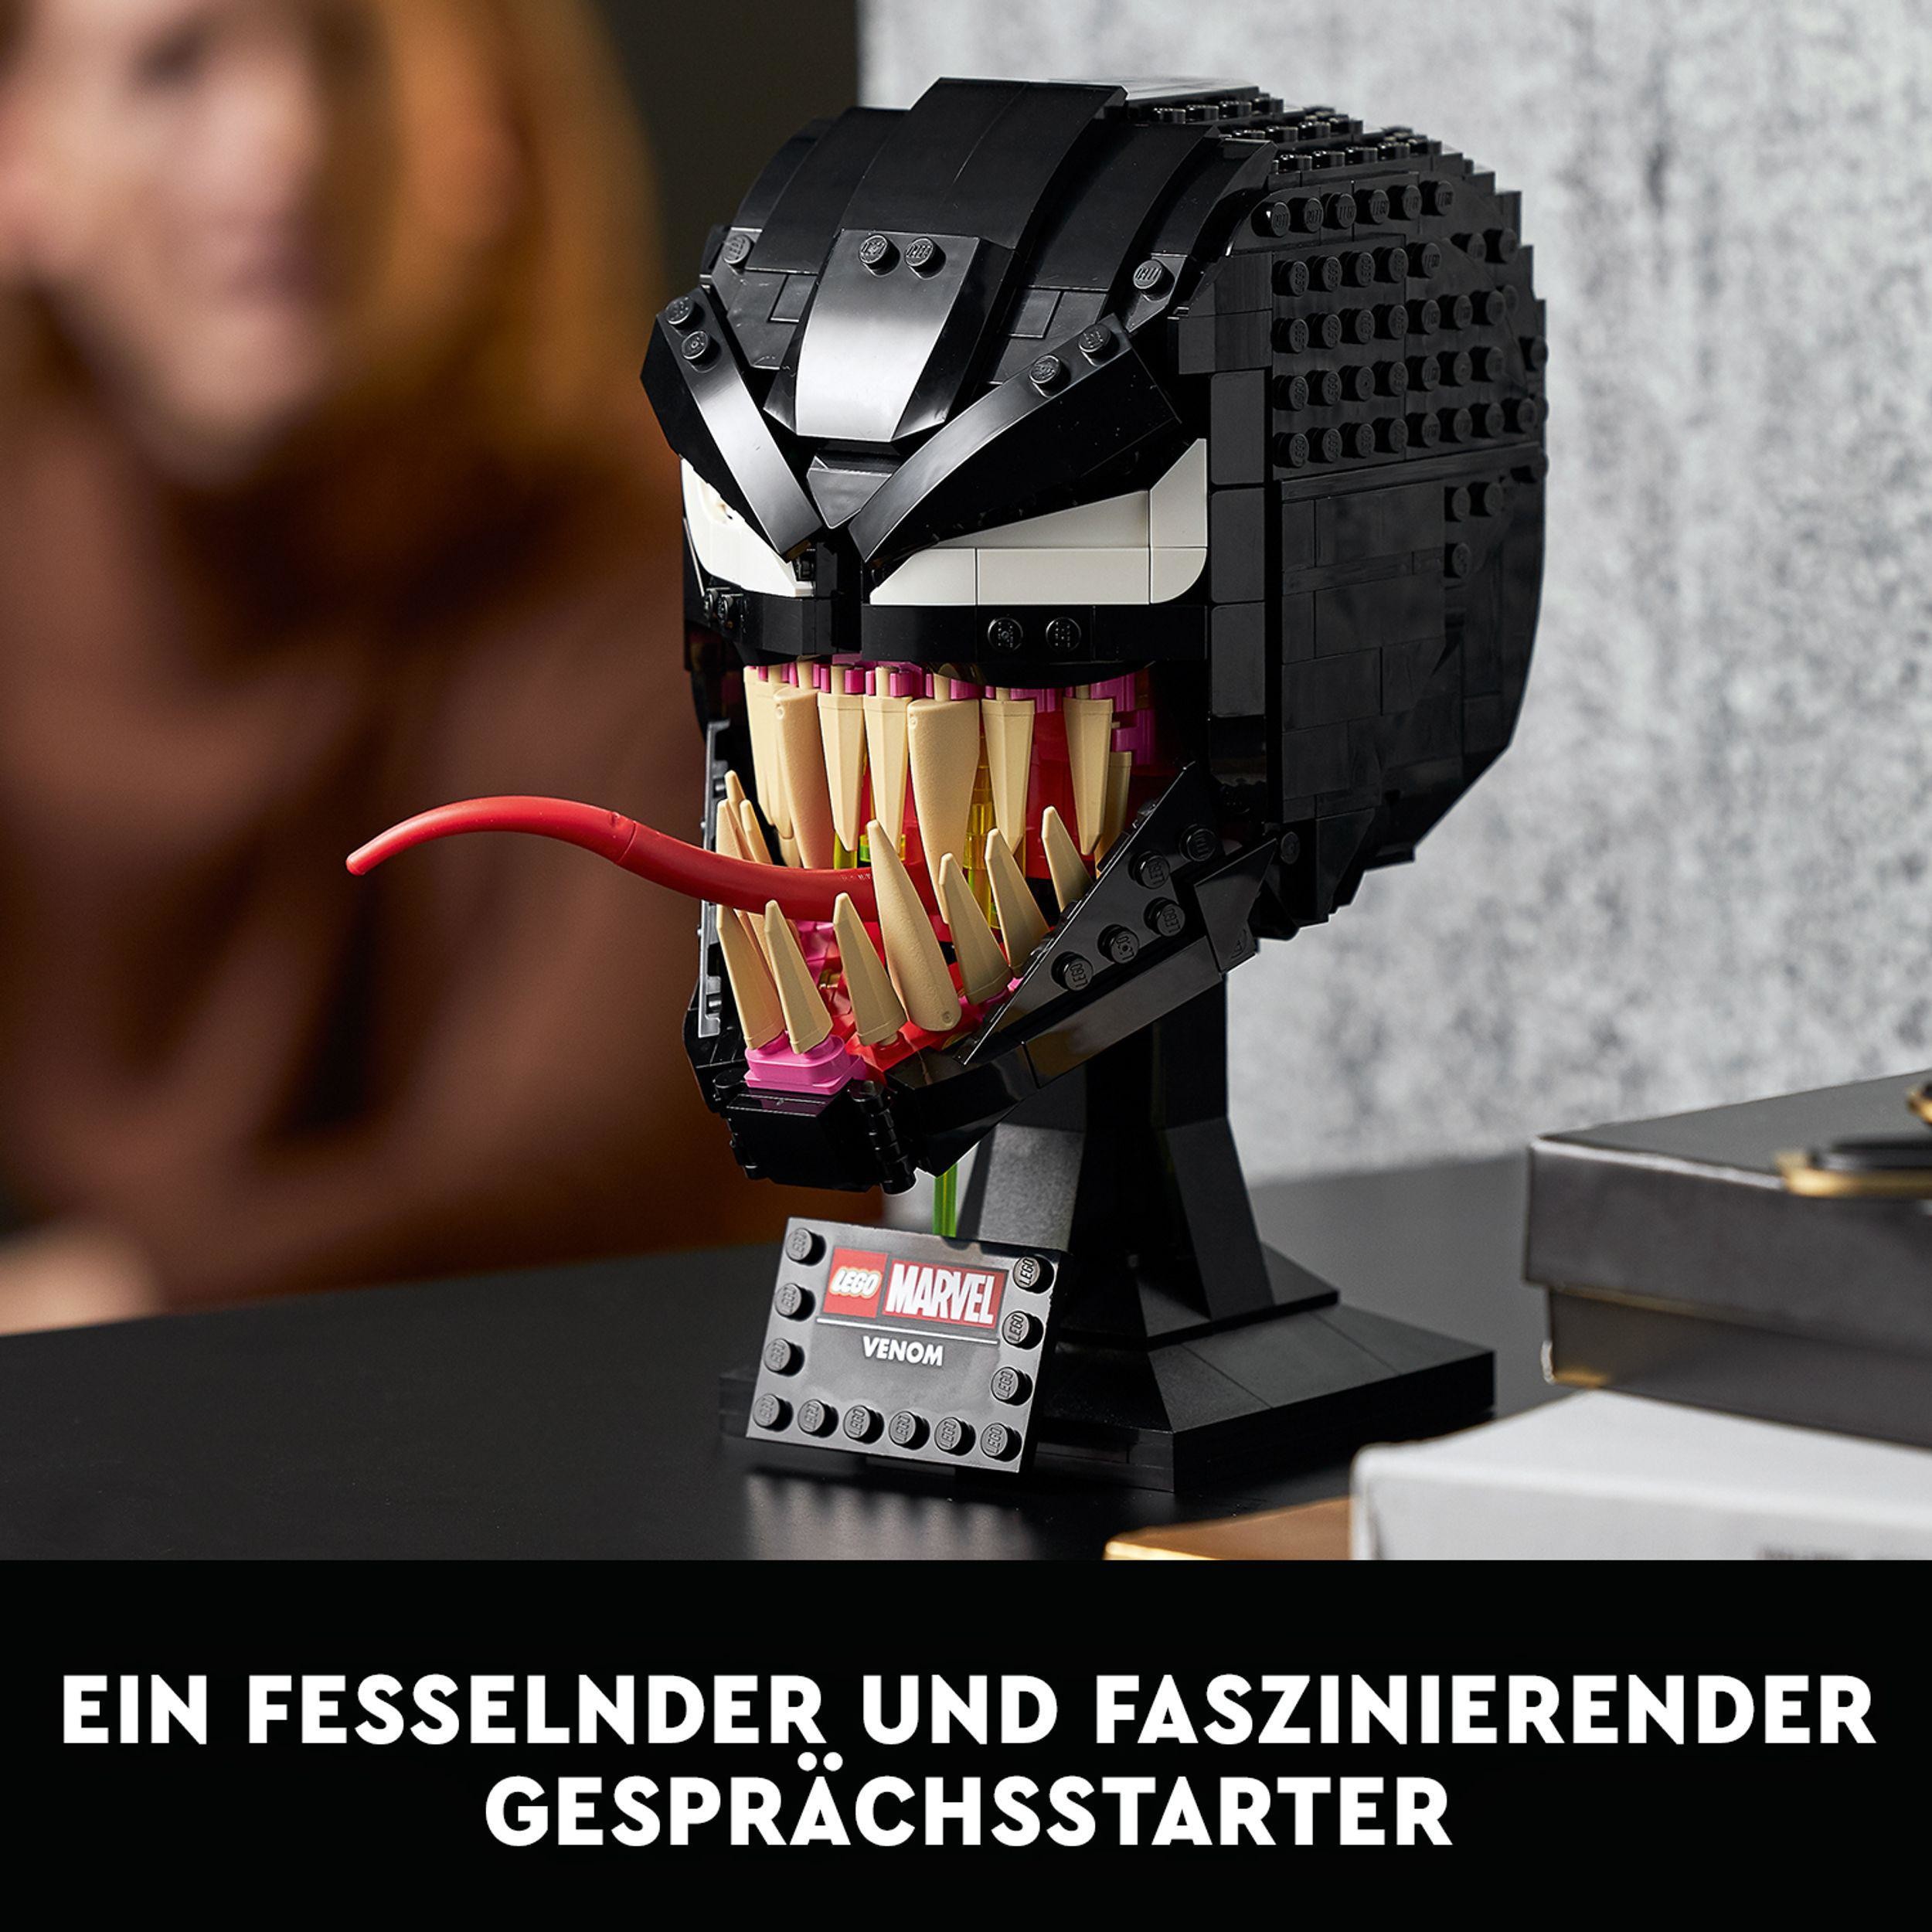 LEGO Marvel Super Heroes Marvel Spider-Man – Venom